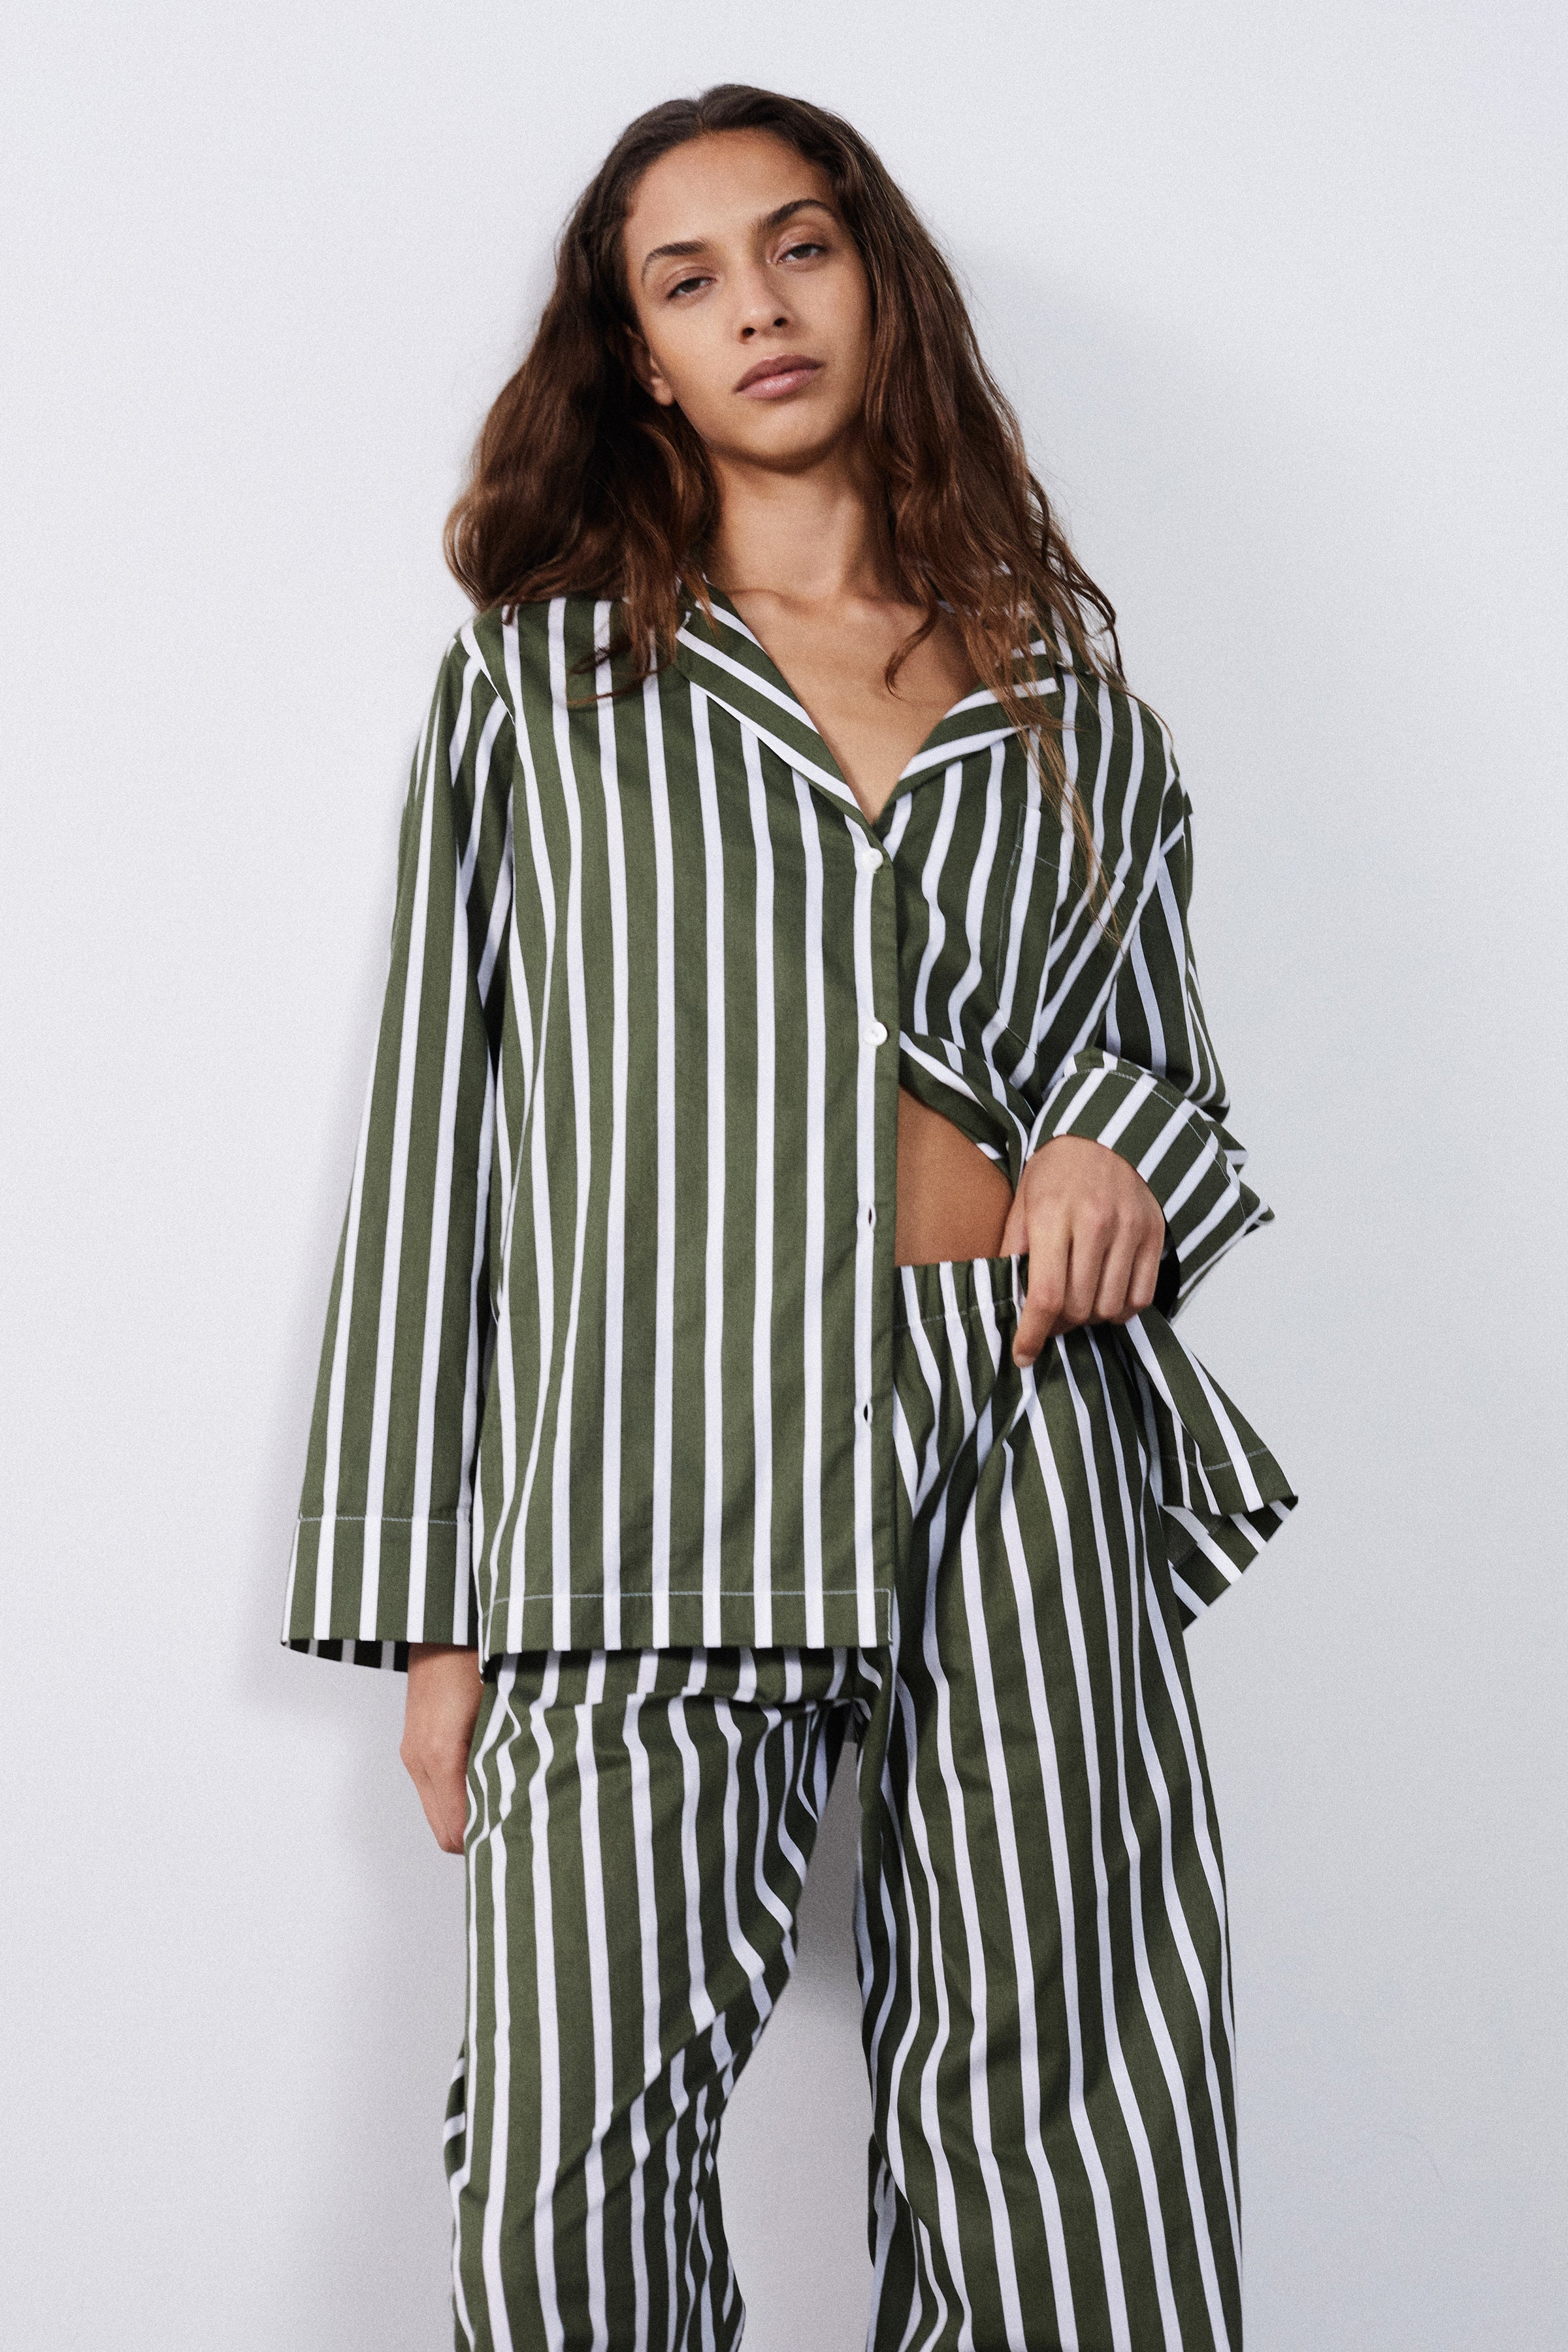 Striped Olive Pyjamas - Green & White Striped Pyjamas - Women's Green ...